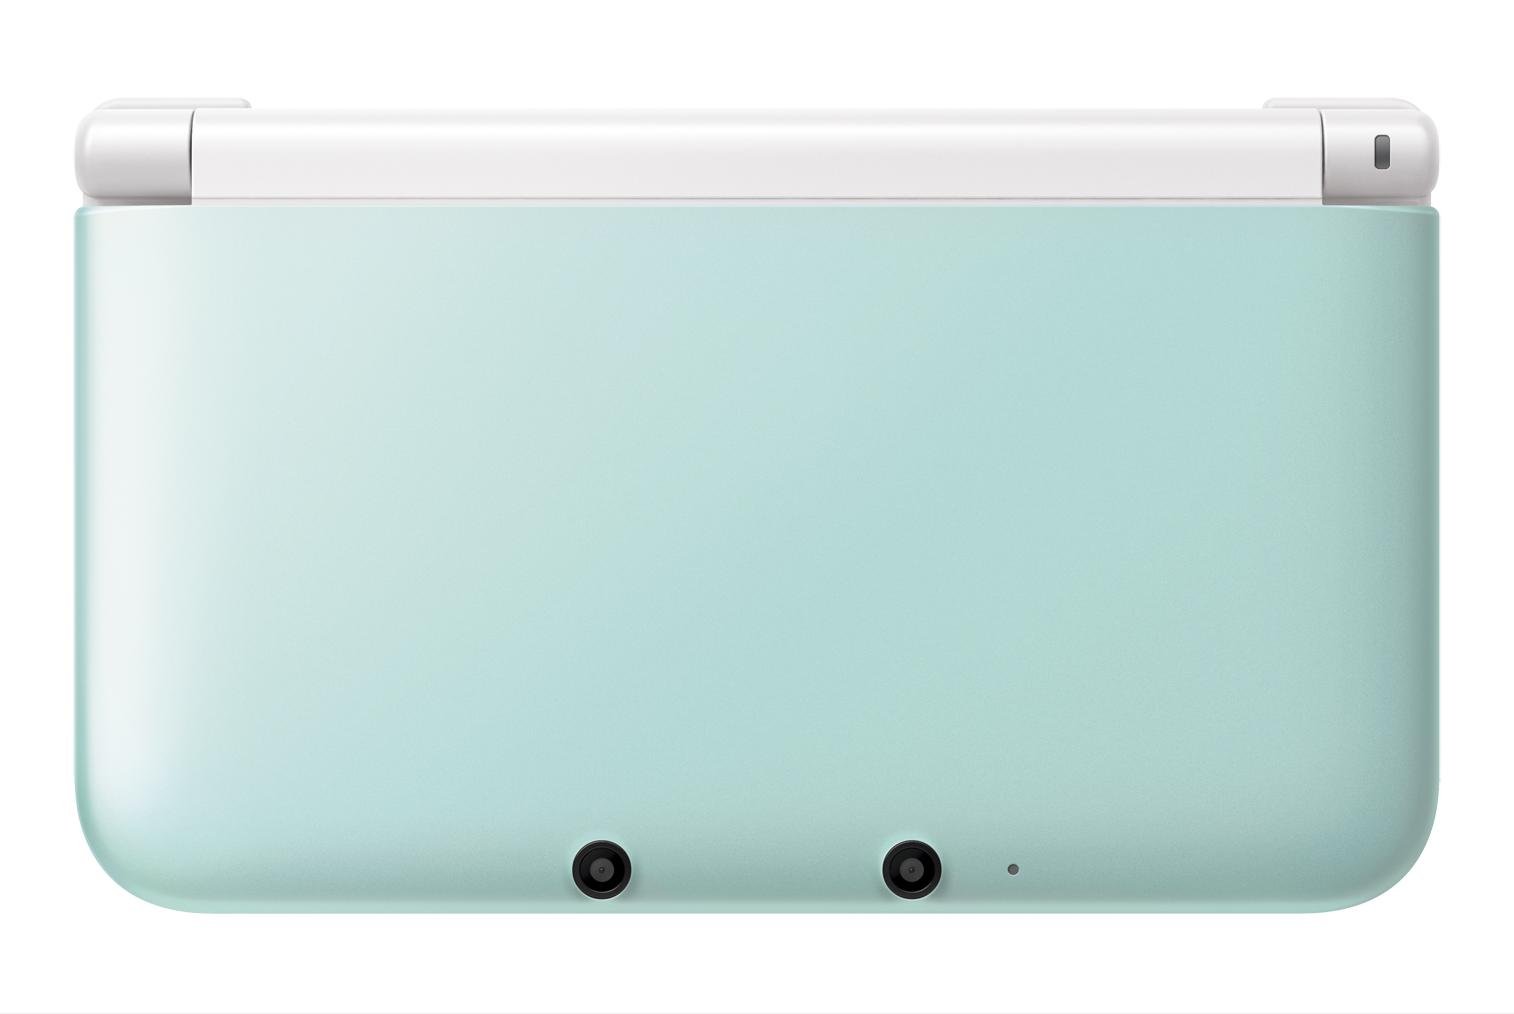 Nintendo 3DS LL mint X white (SPR-S-MAAA) (Renewed)